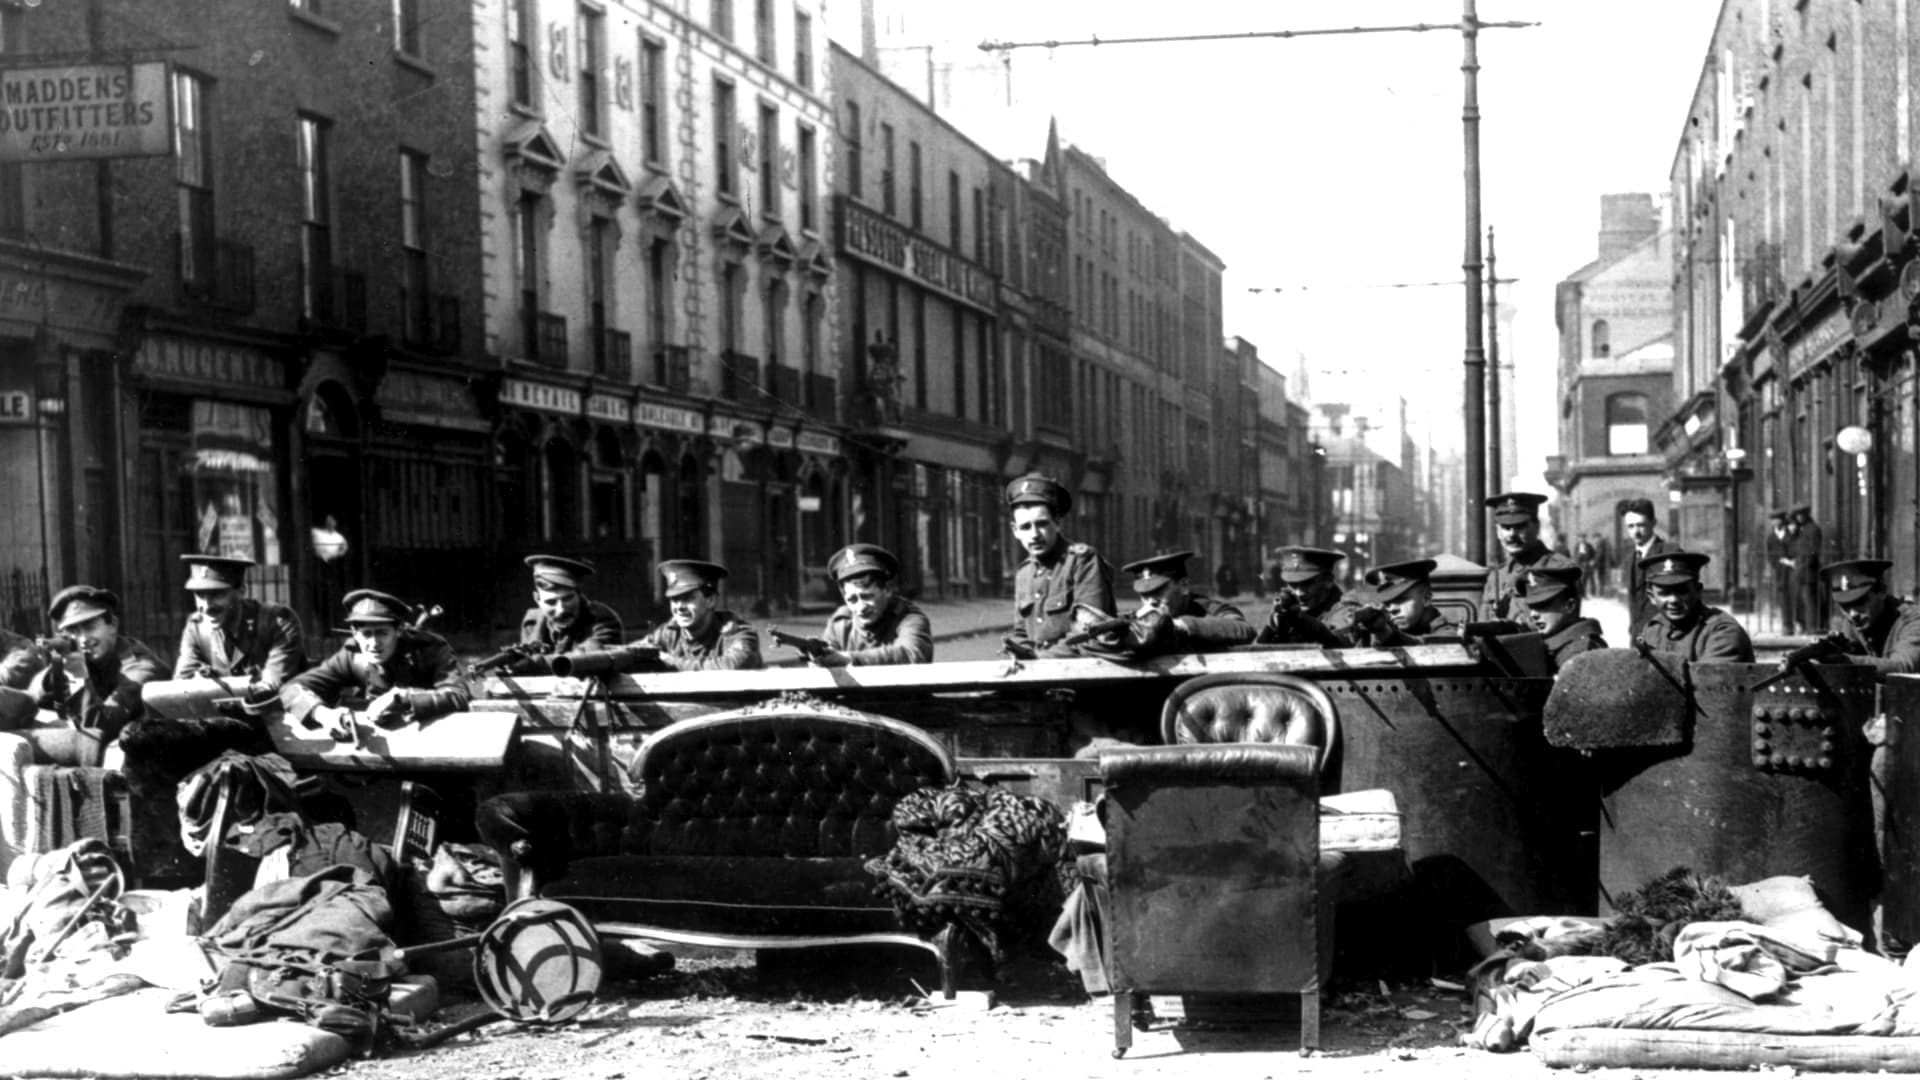 1916: The Irish Rebellion background